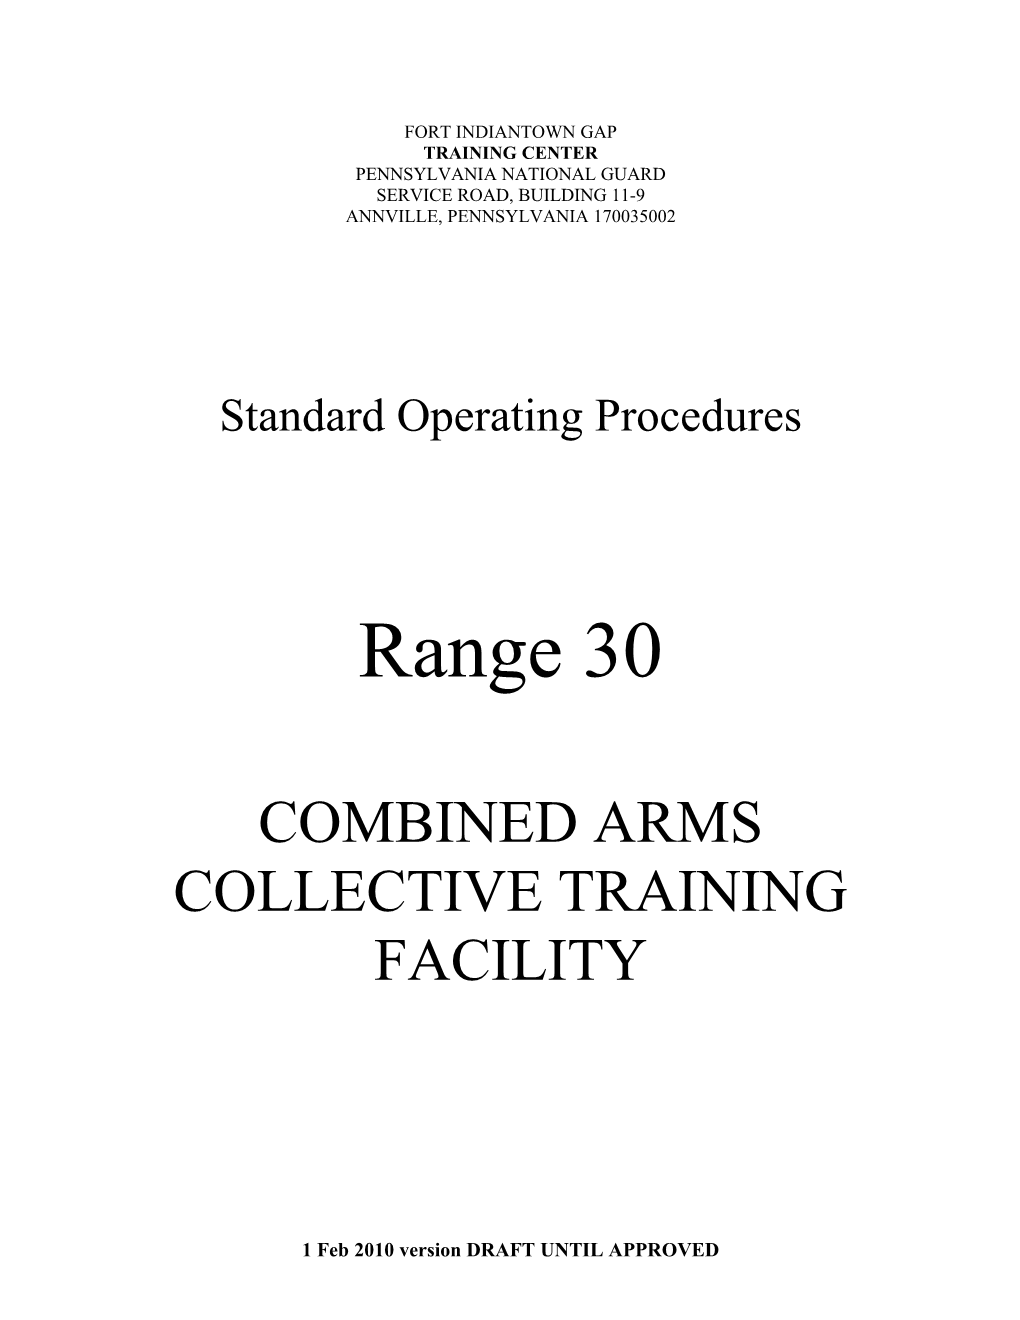 CACTF Standard Operating Procedures